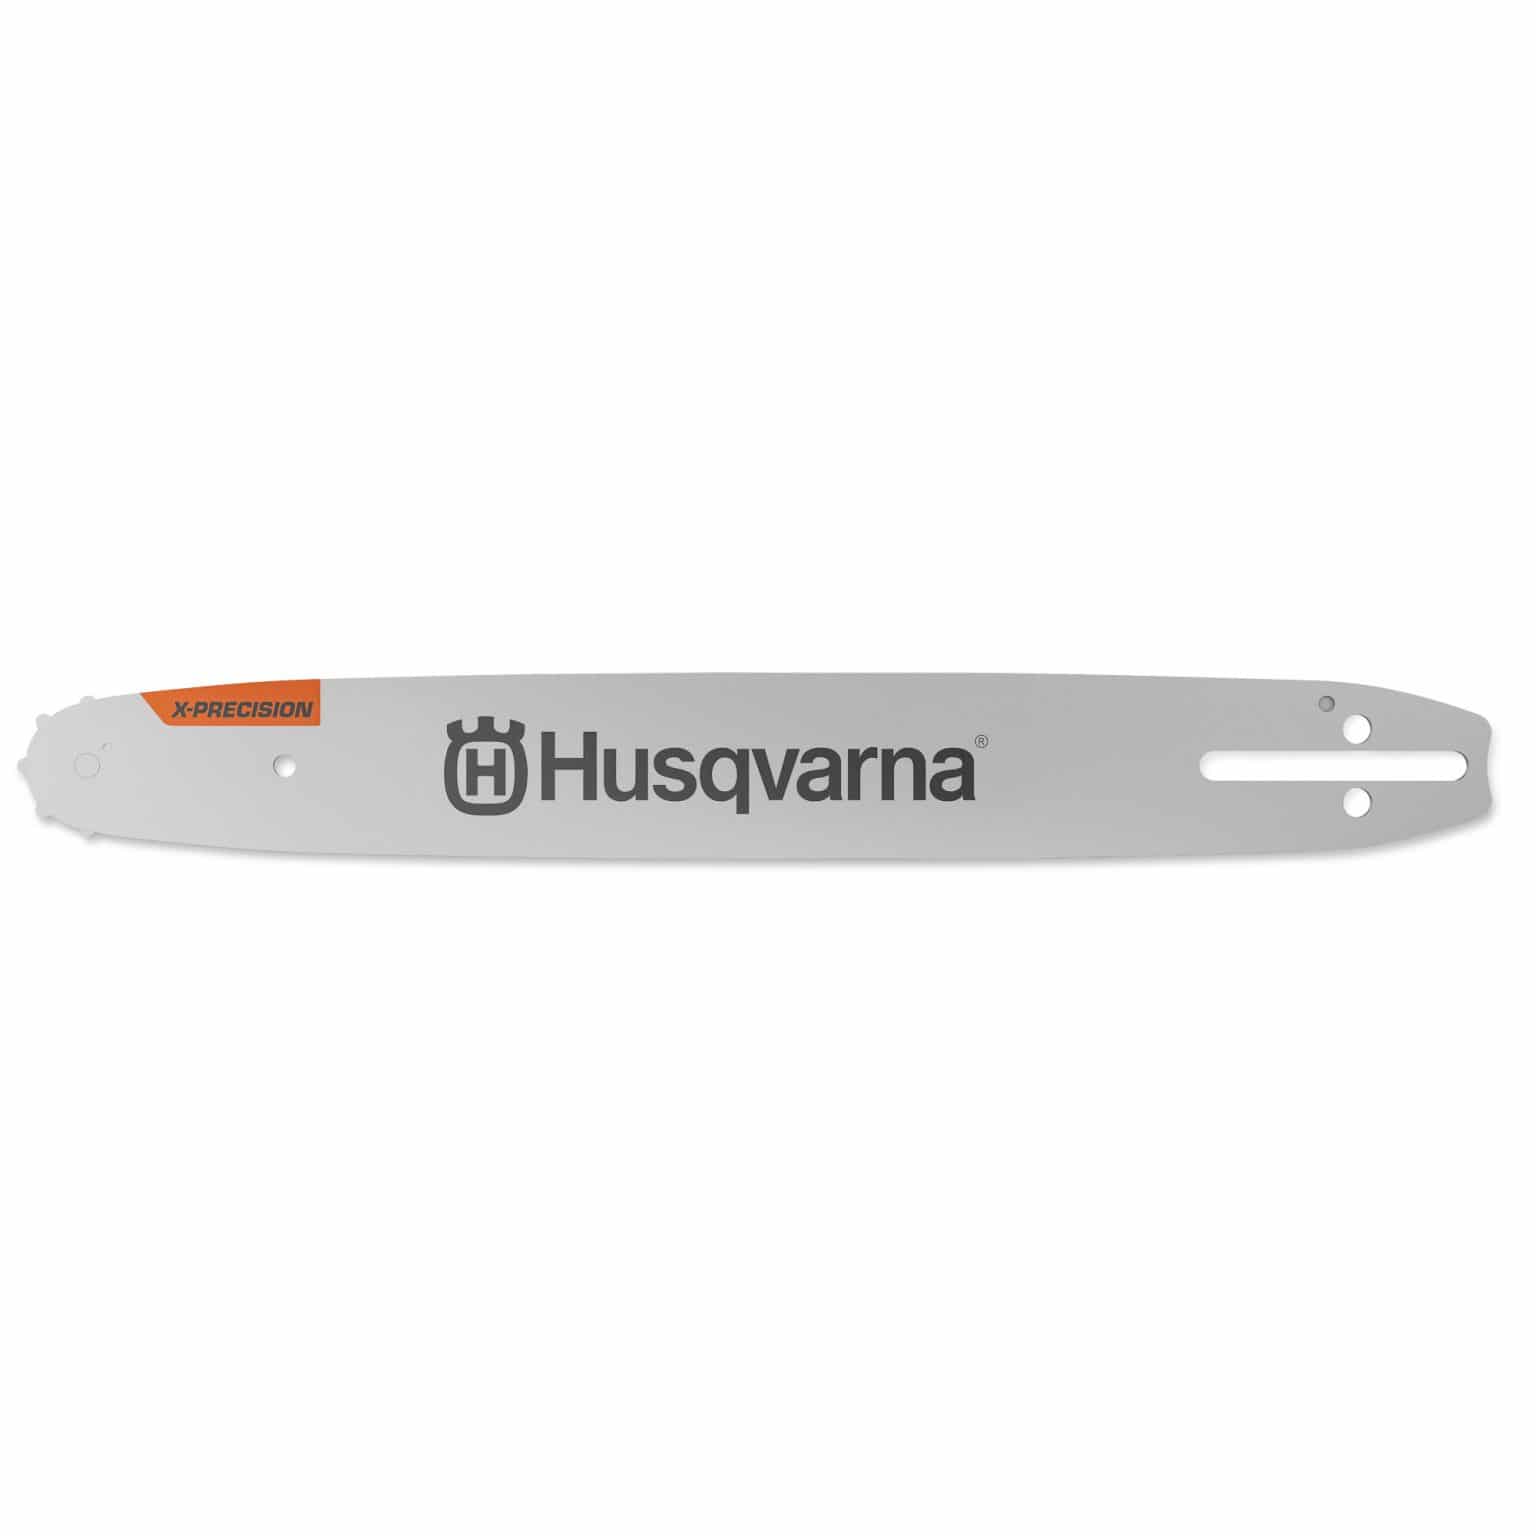 Husqvarna X-Precision Bar .325 1.1mm